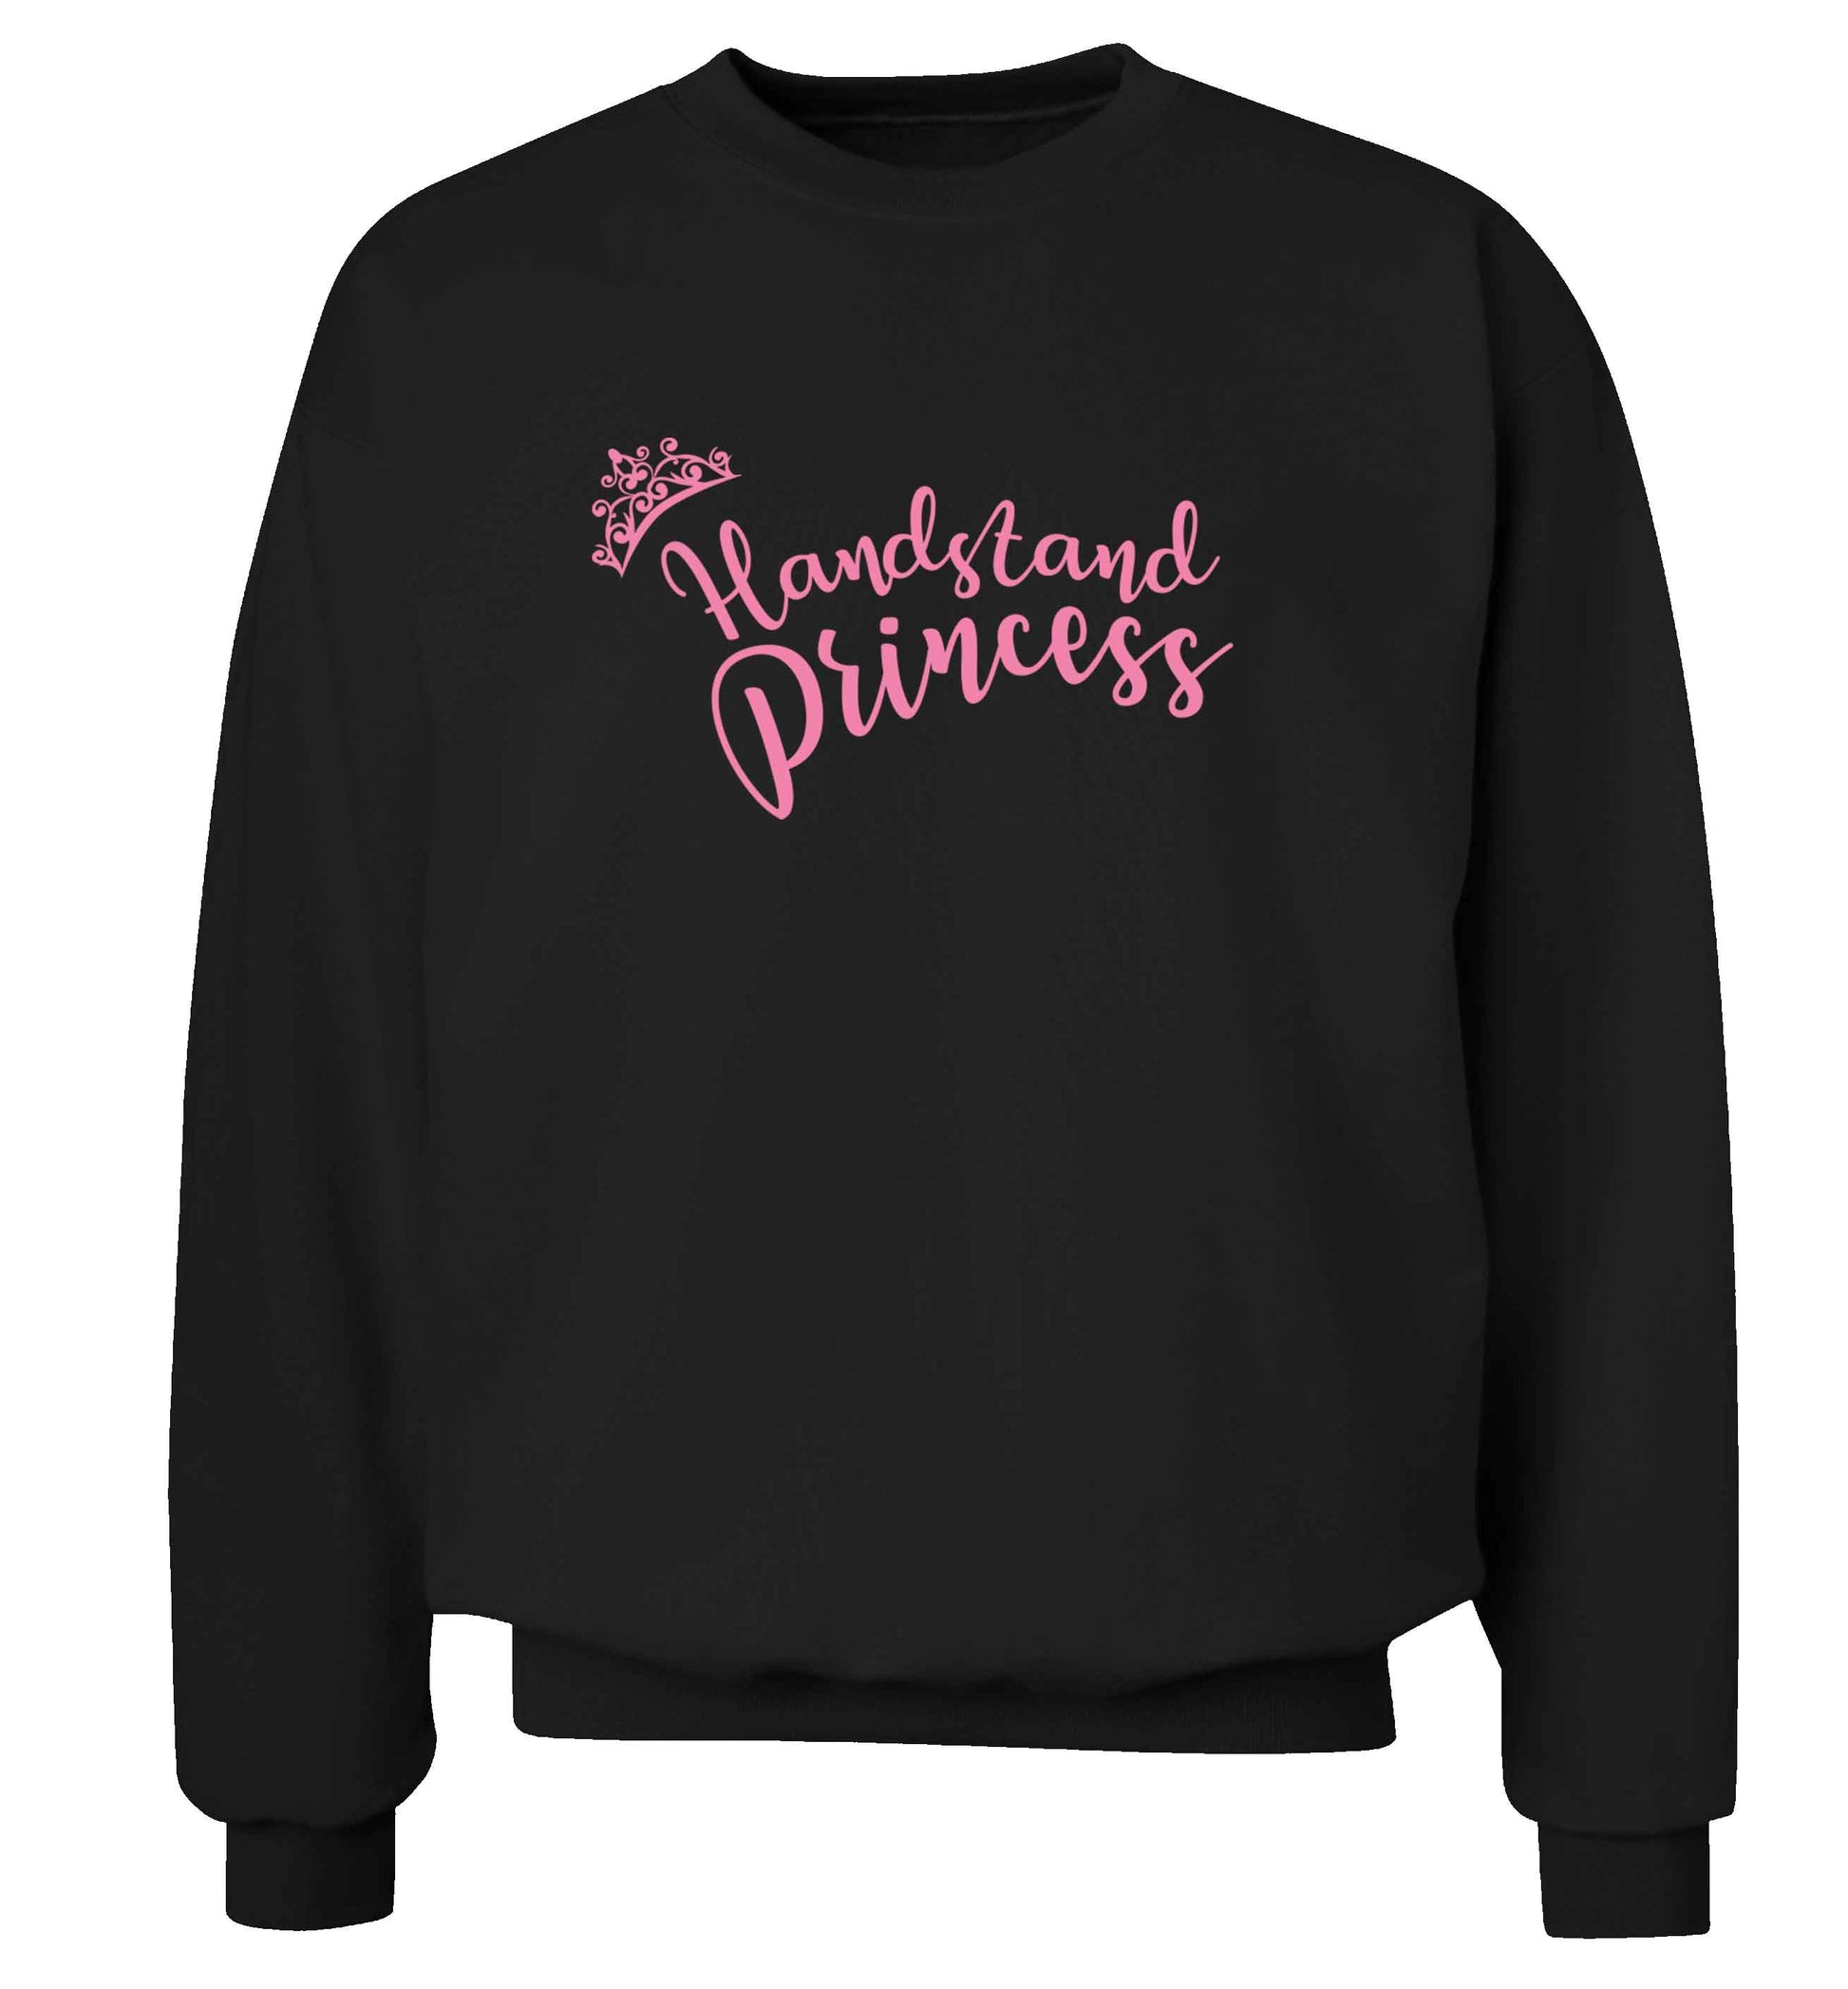 Handstand princess Adult's unisex black Sweater 2XL